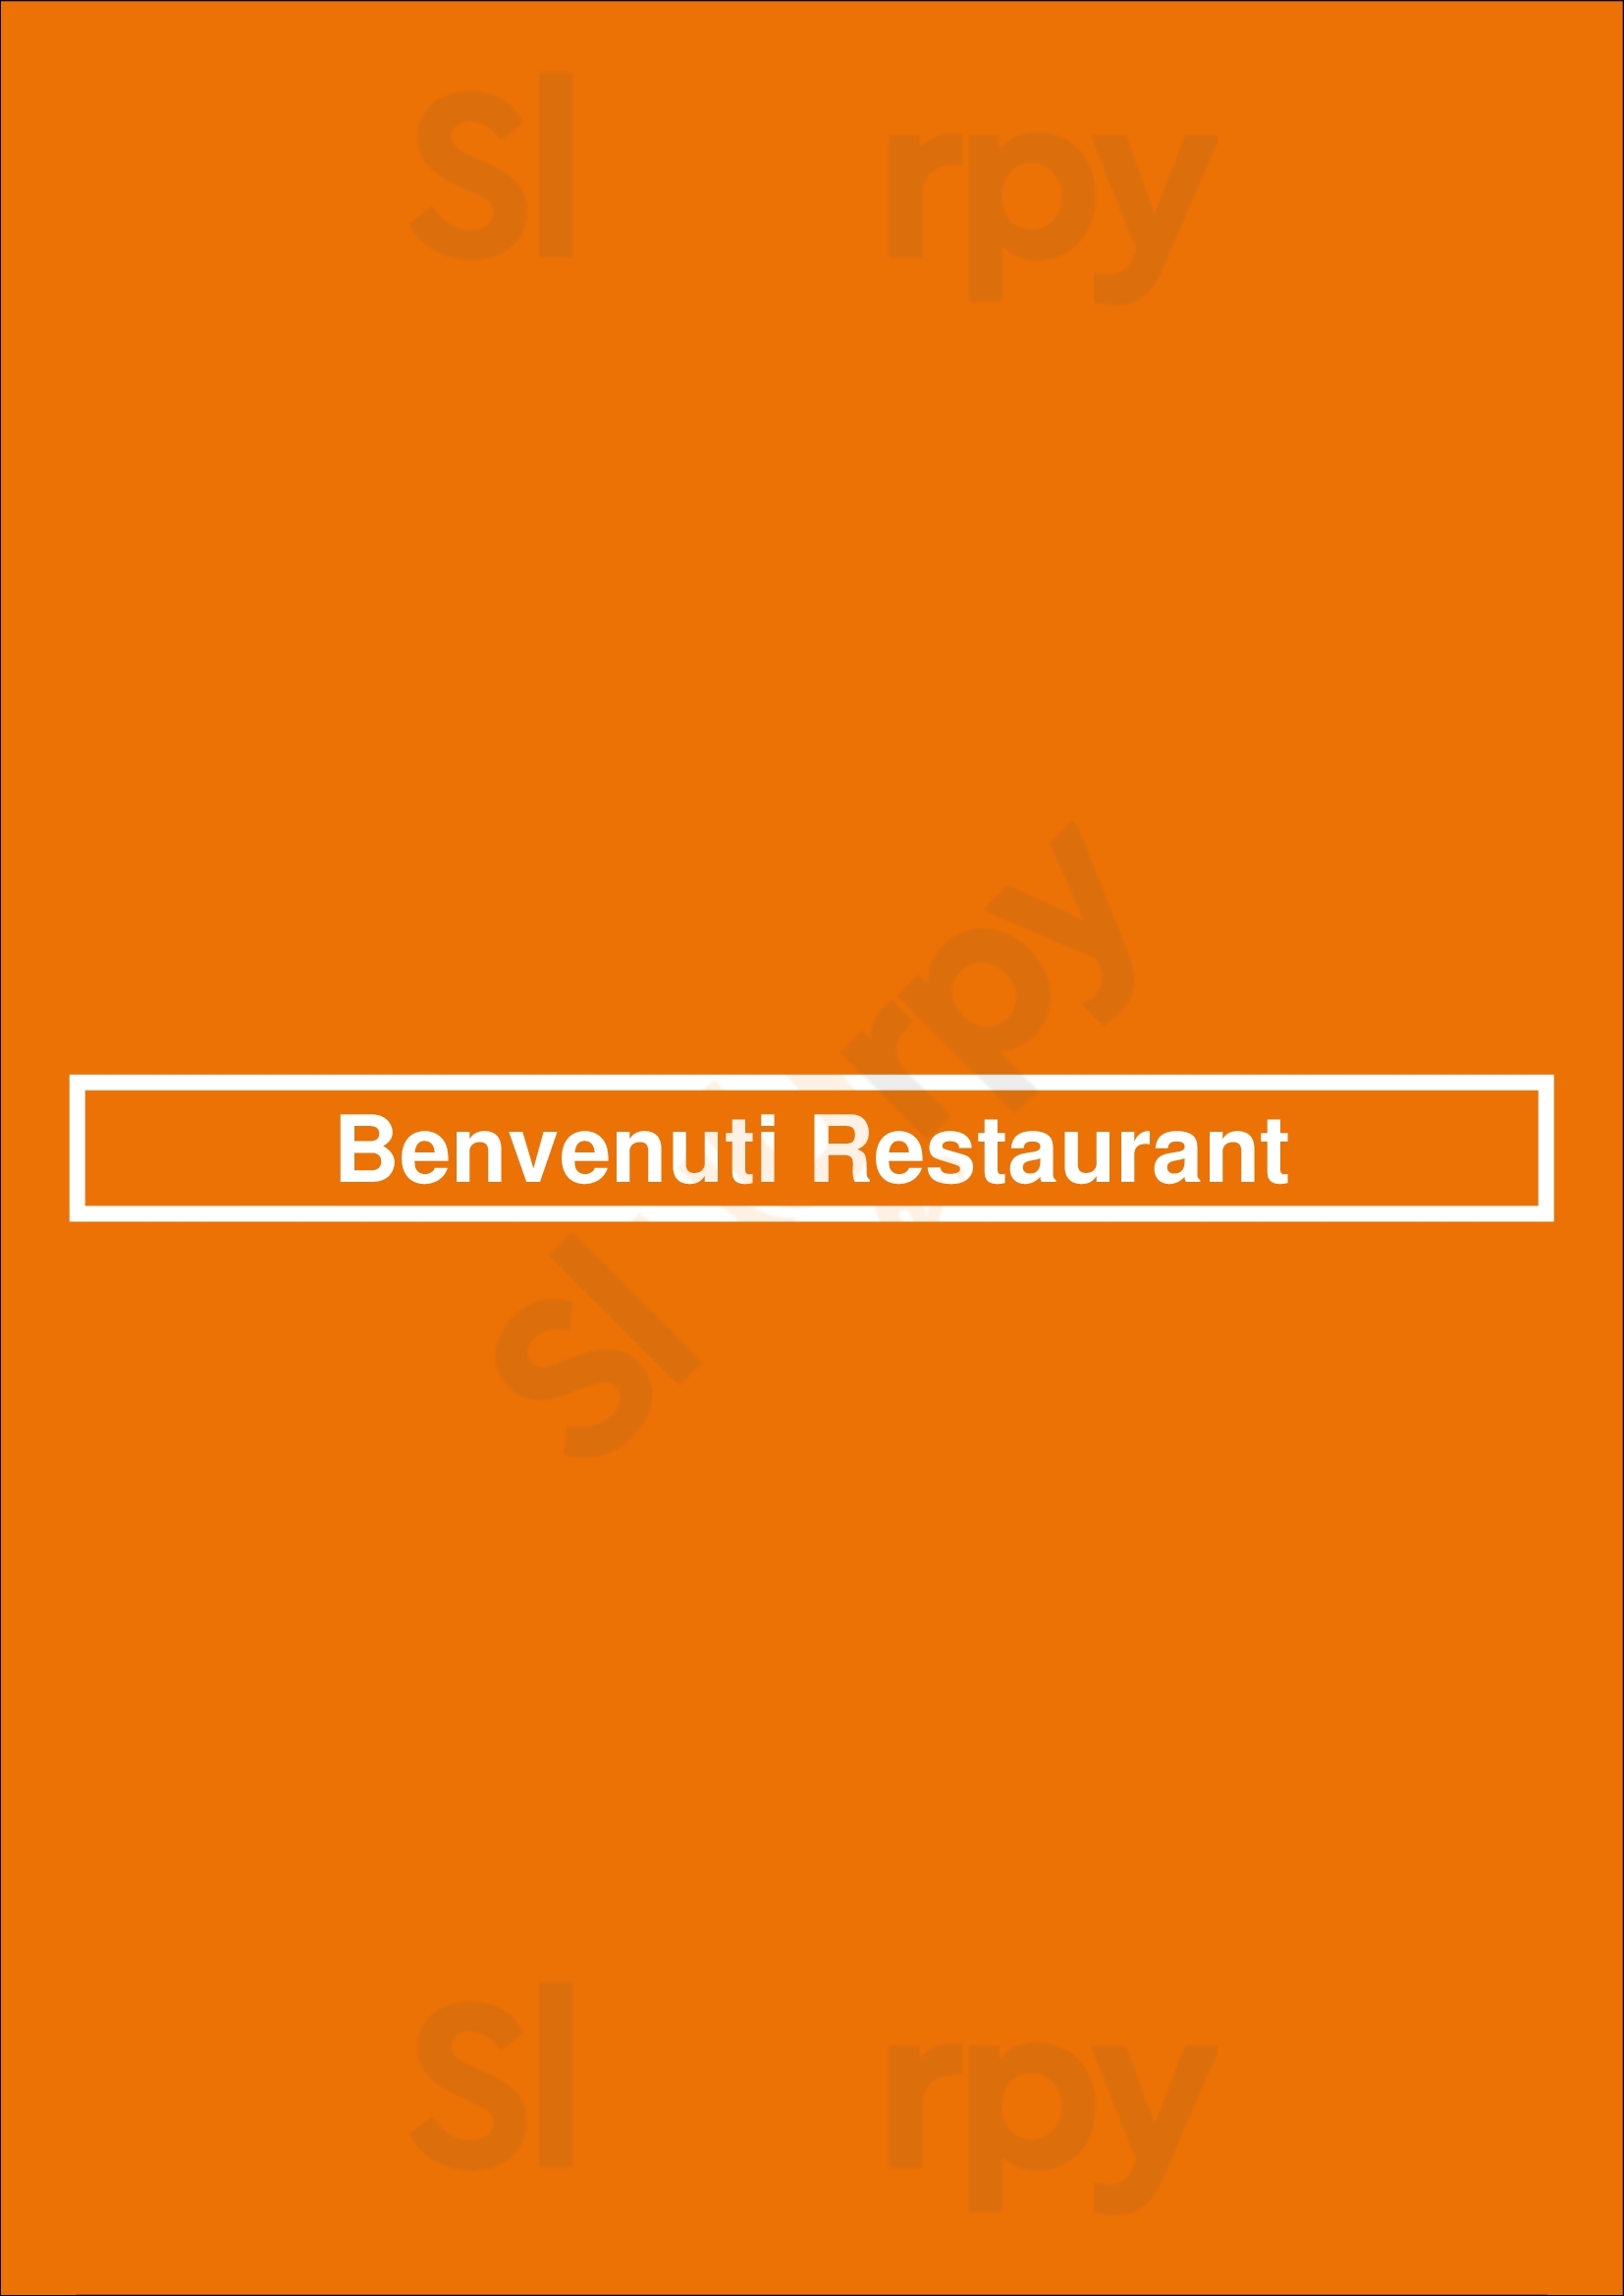 Benvenuti Restaurant Randwick Menu - 1